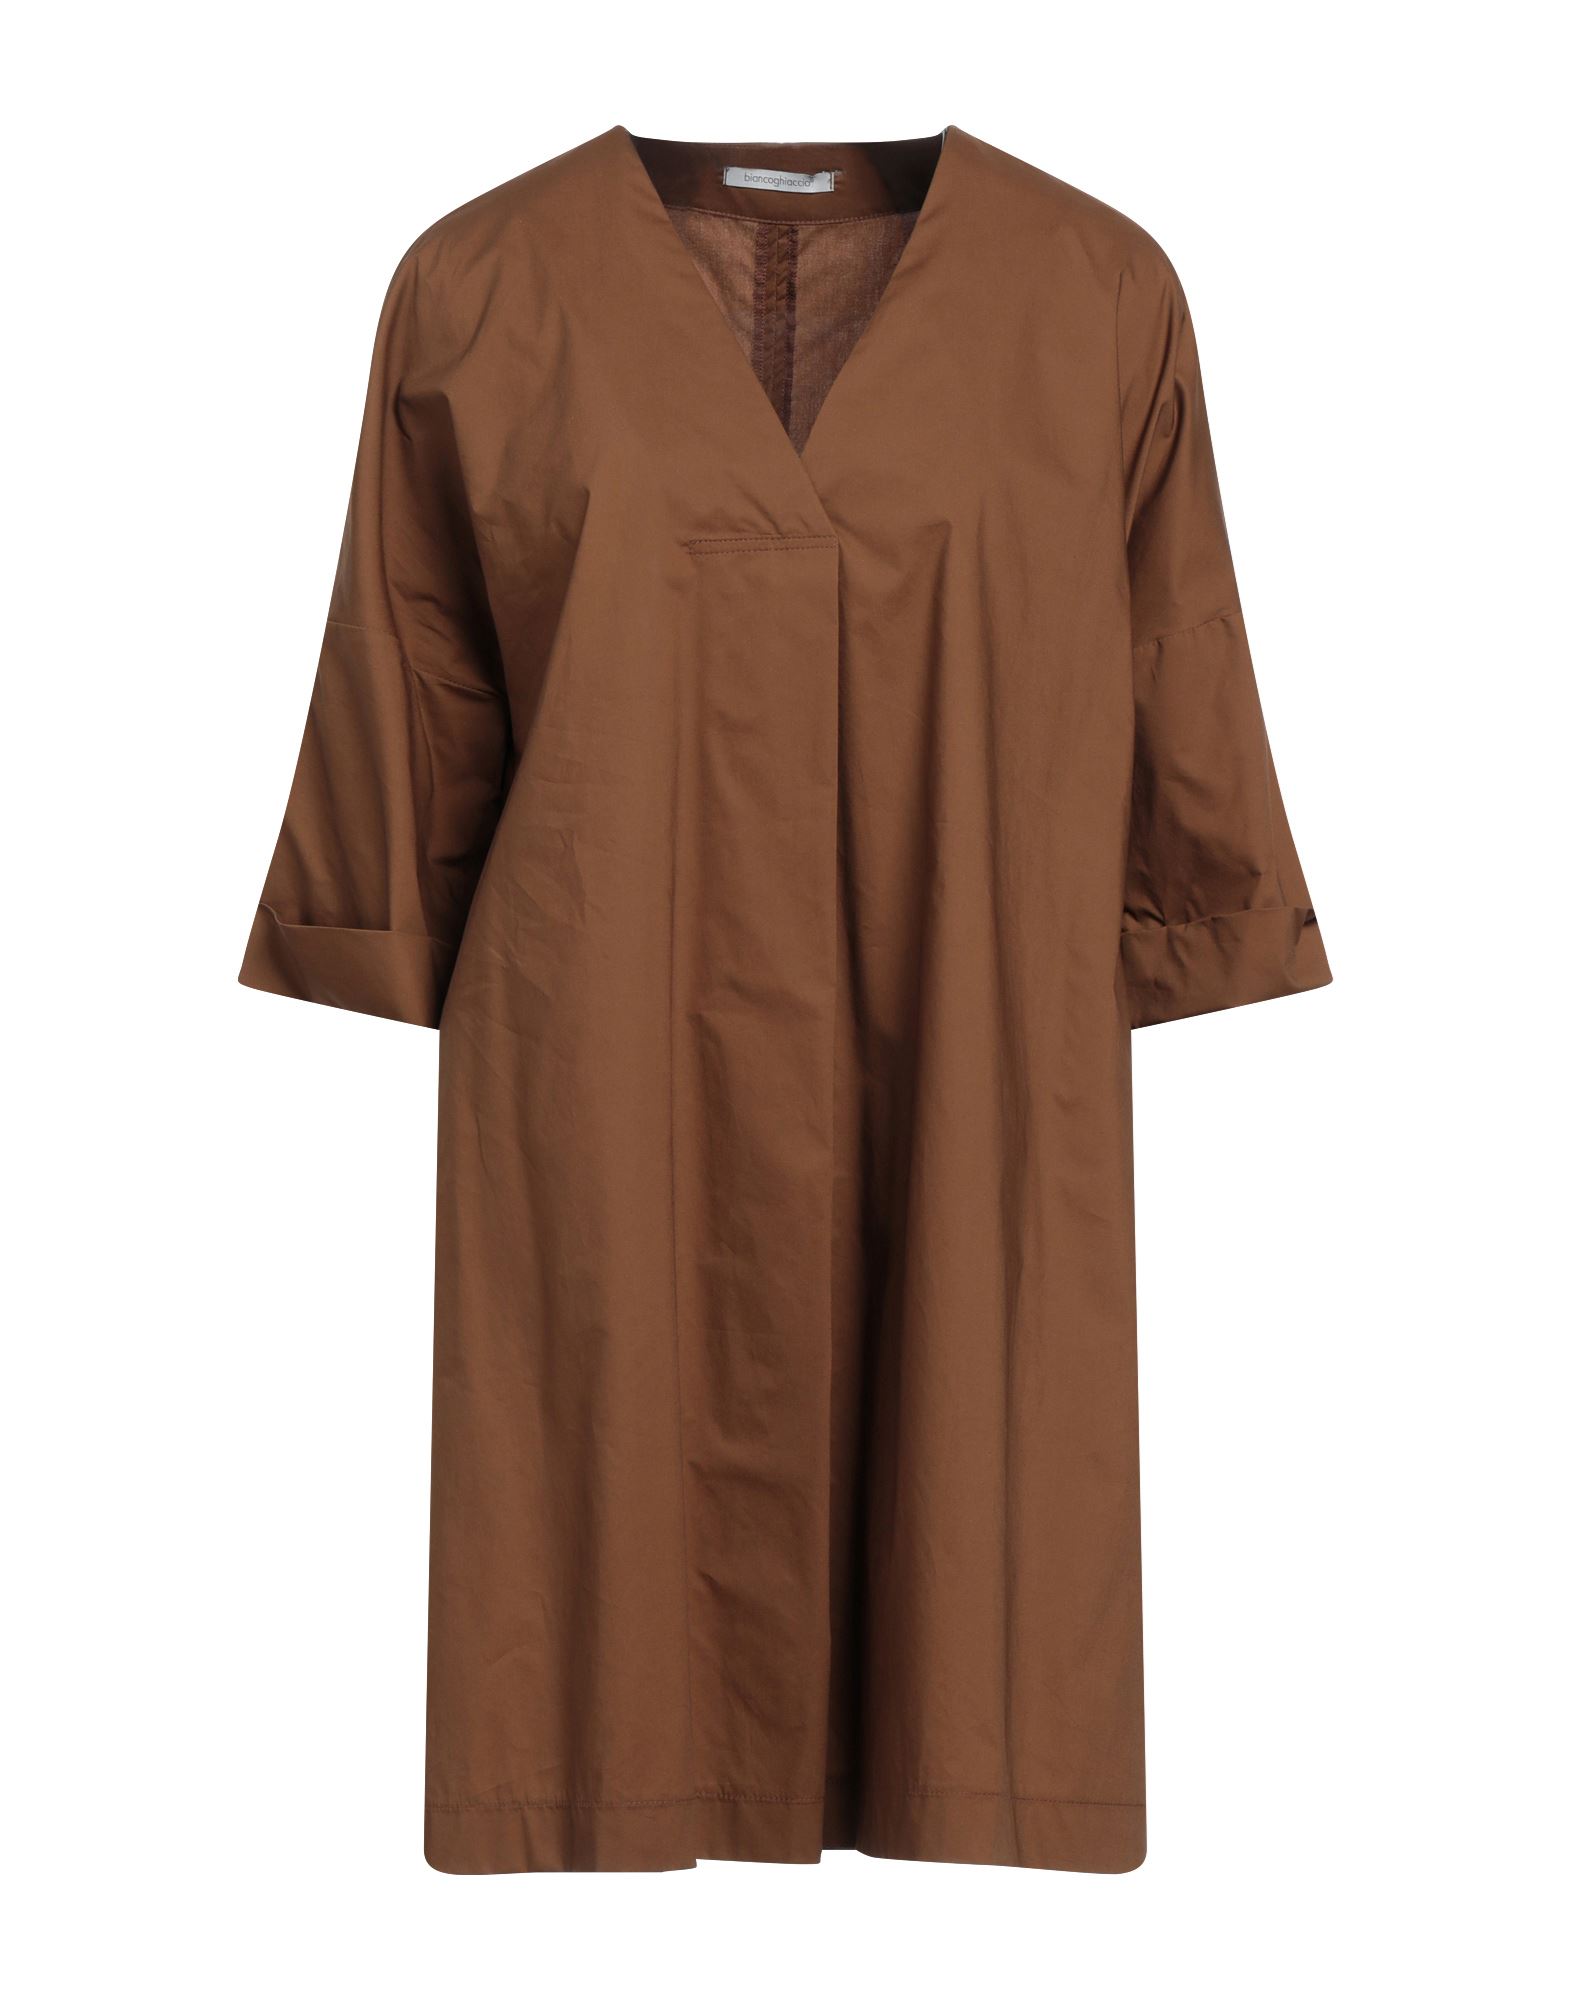 Biancoghiaccio Short Dresses In Brown